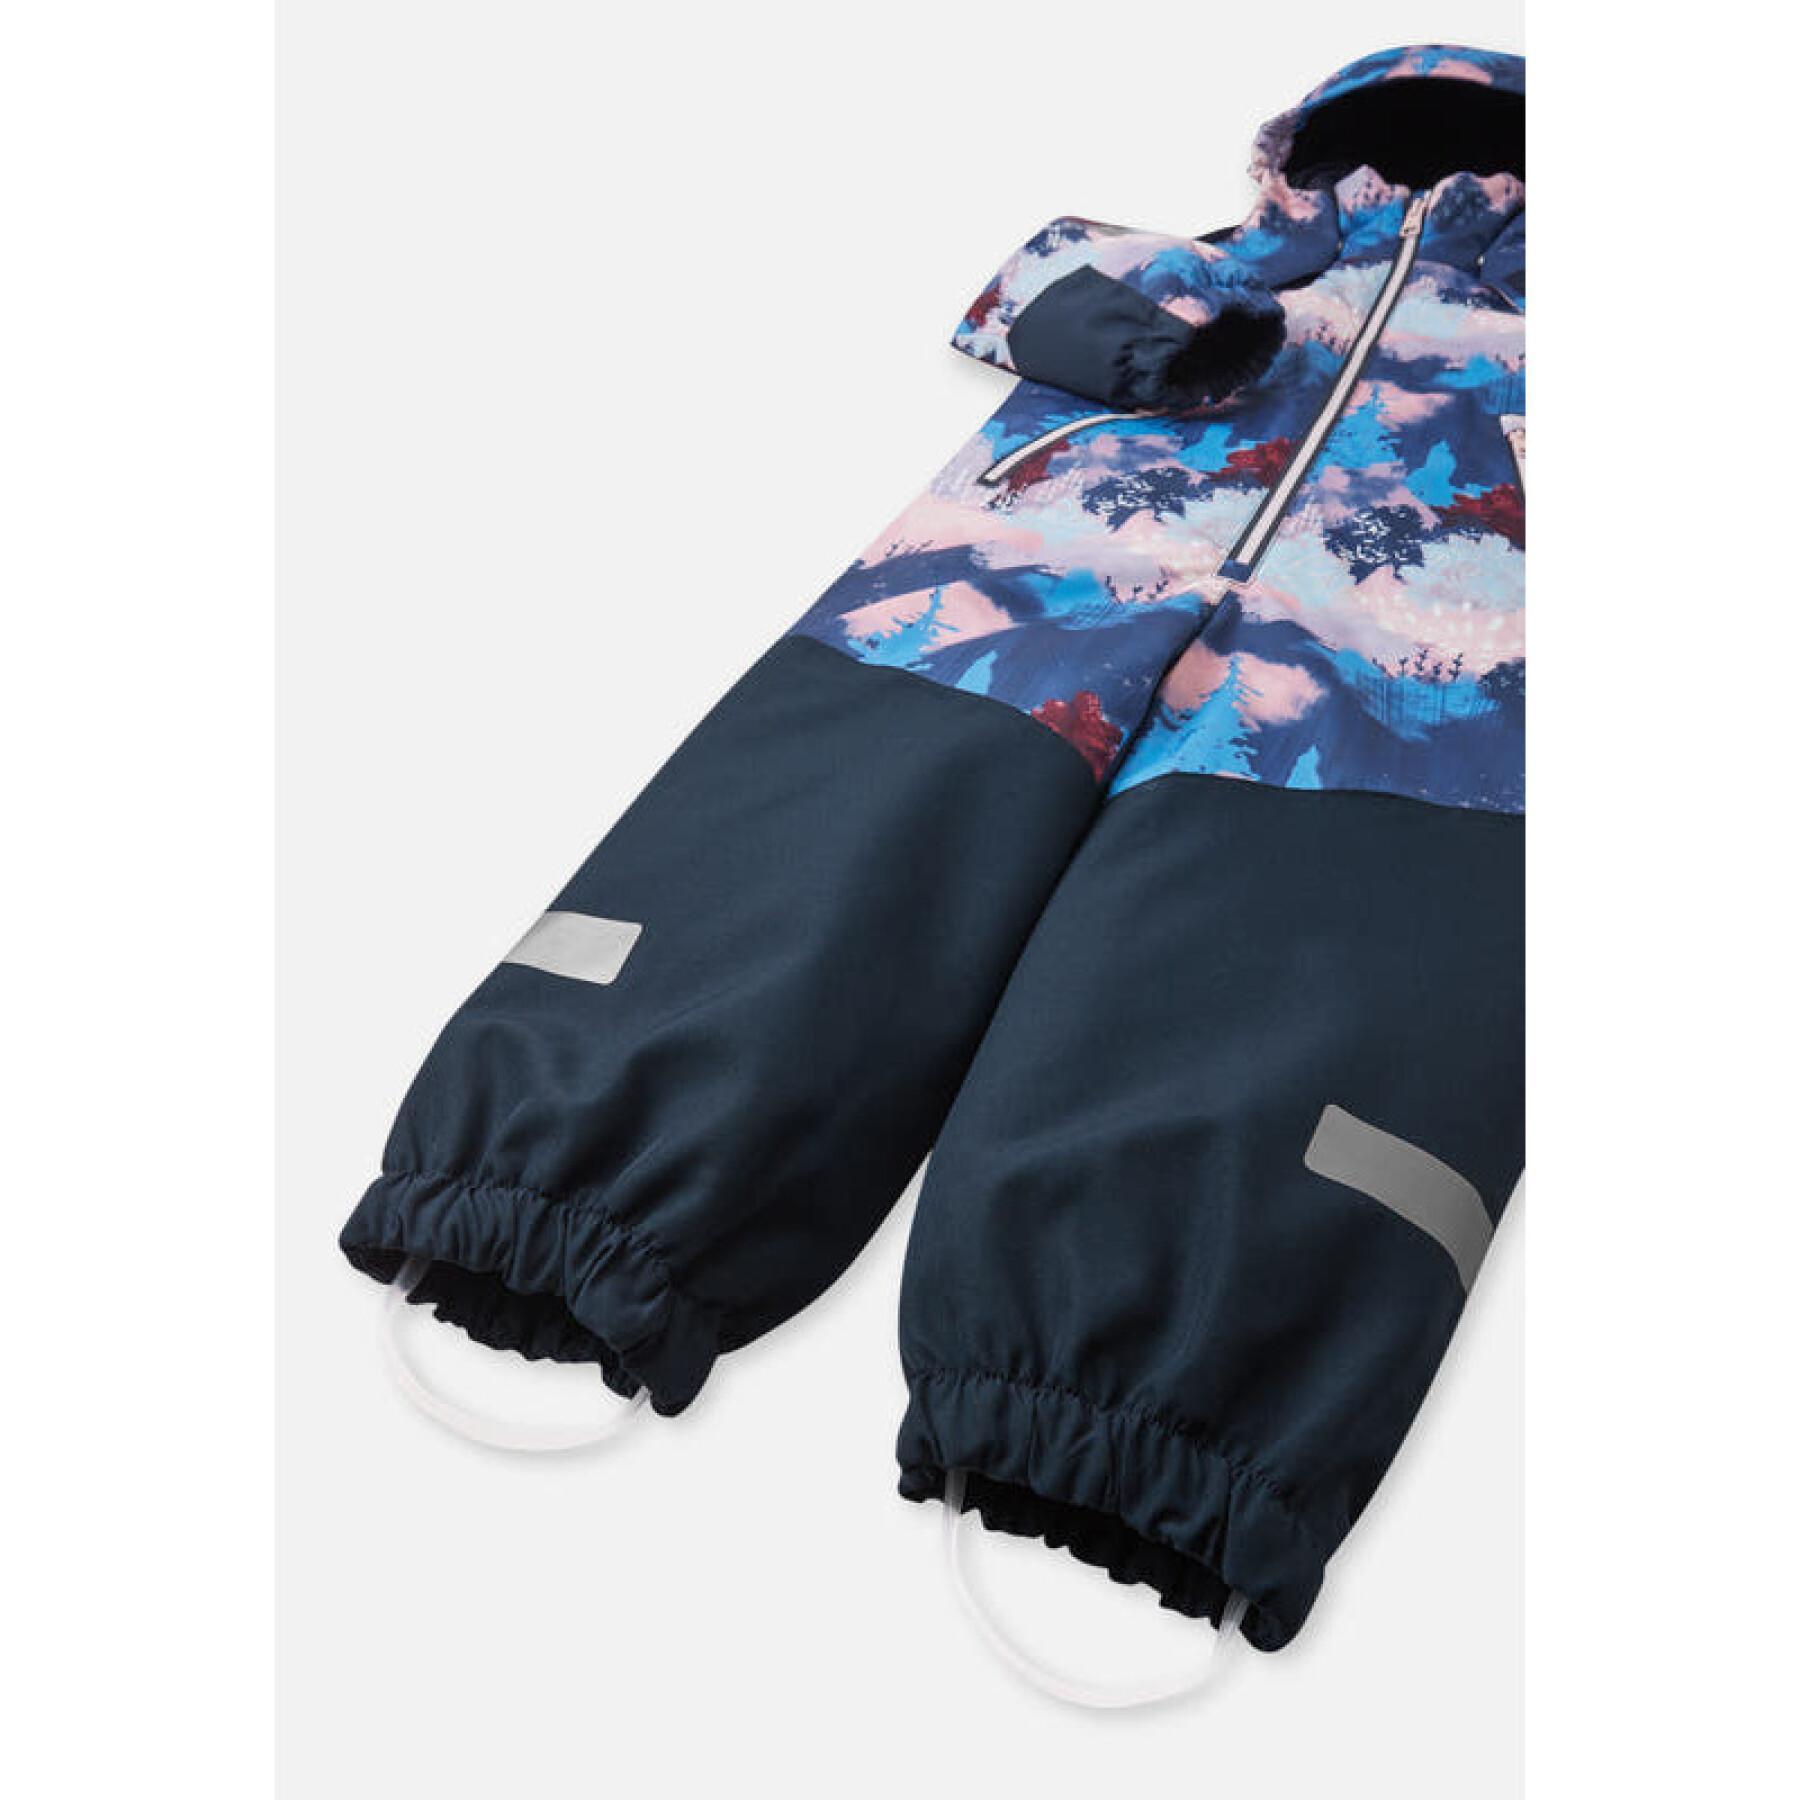 Baby ski suit Reima Kurikka